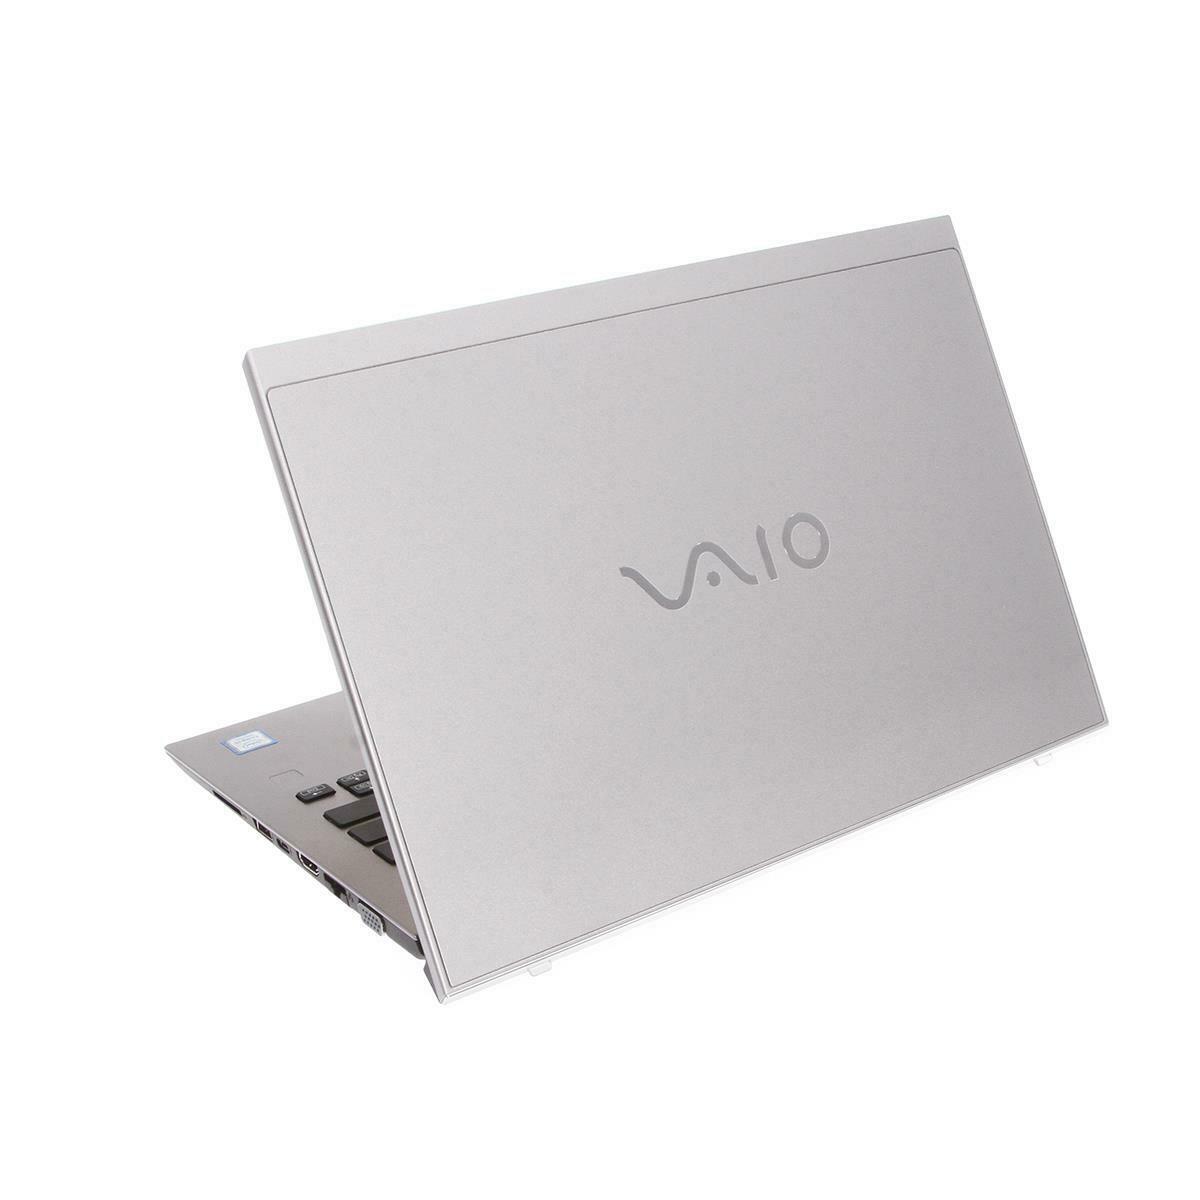 VAIO SX14 14" Full HD Notebook Computer - Silver SKU#1167732